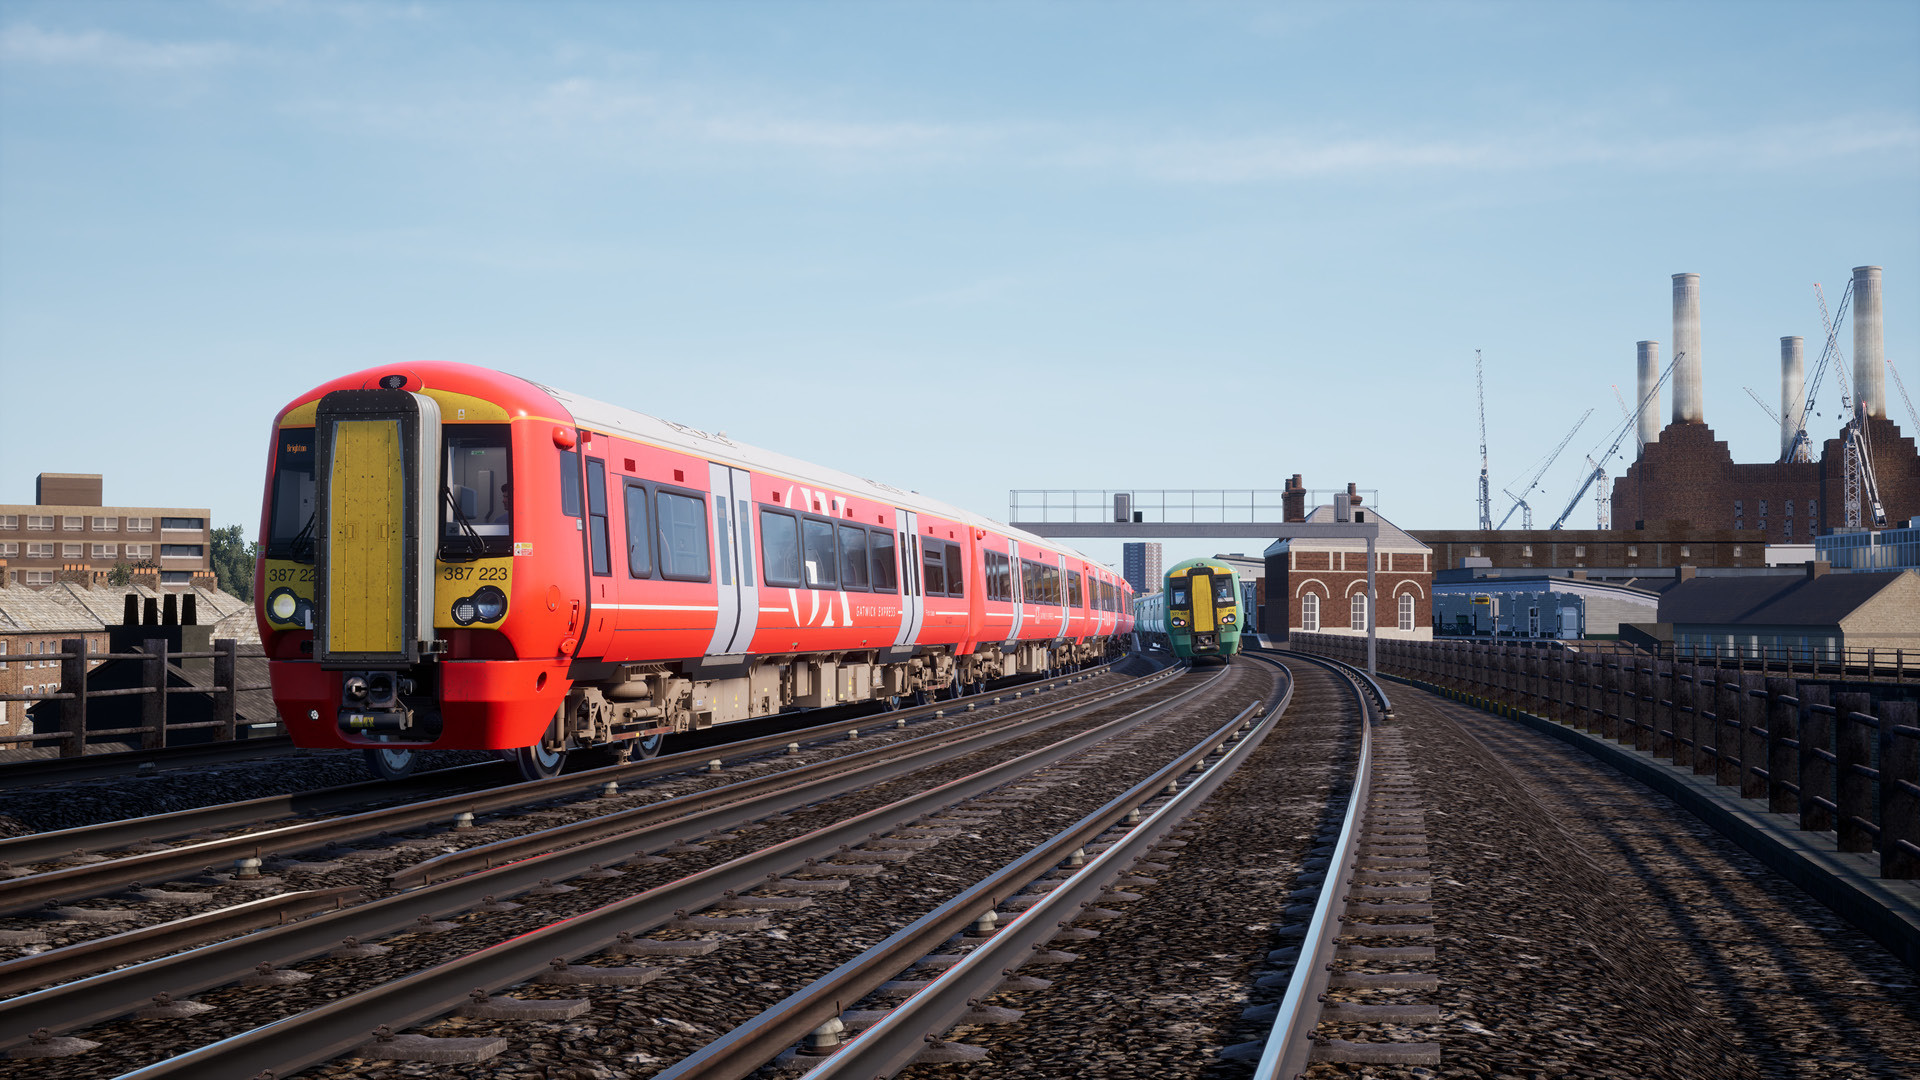 Train Sim World 2: Rush Hour - London Commuter Route Add-On DLC Steam Altergift